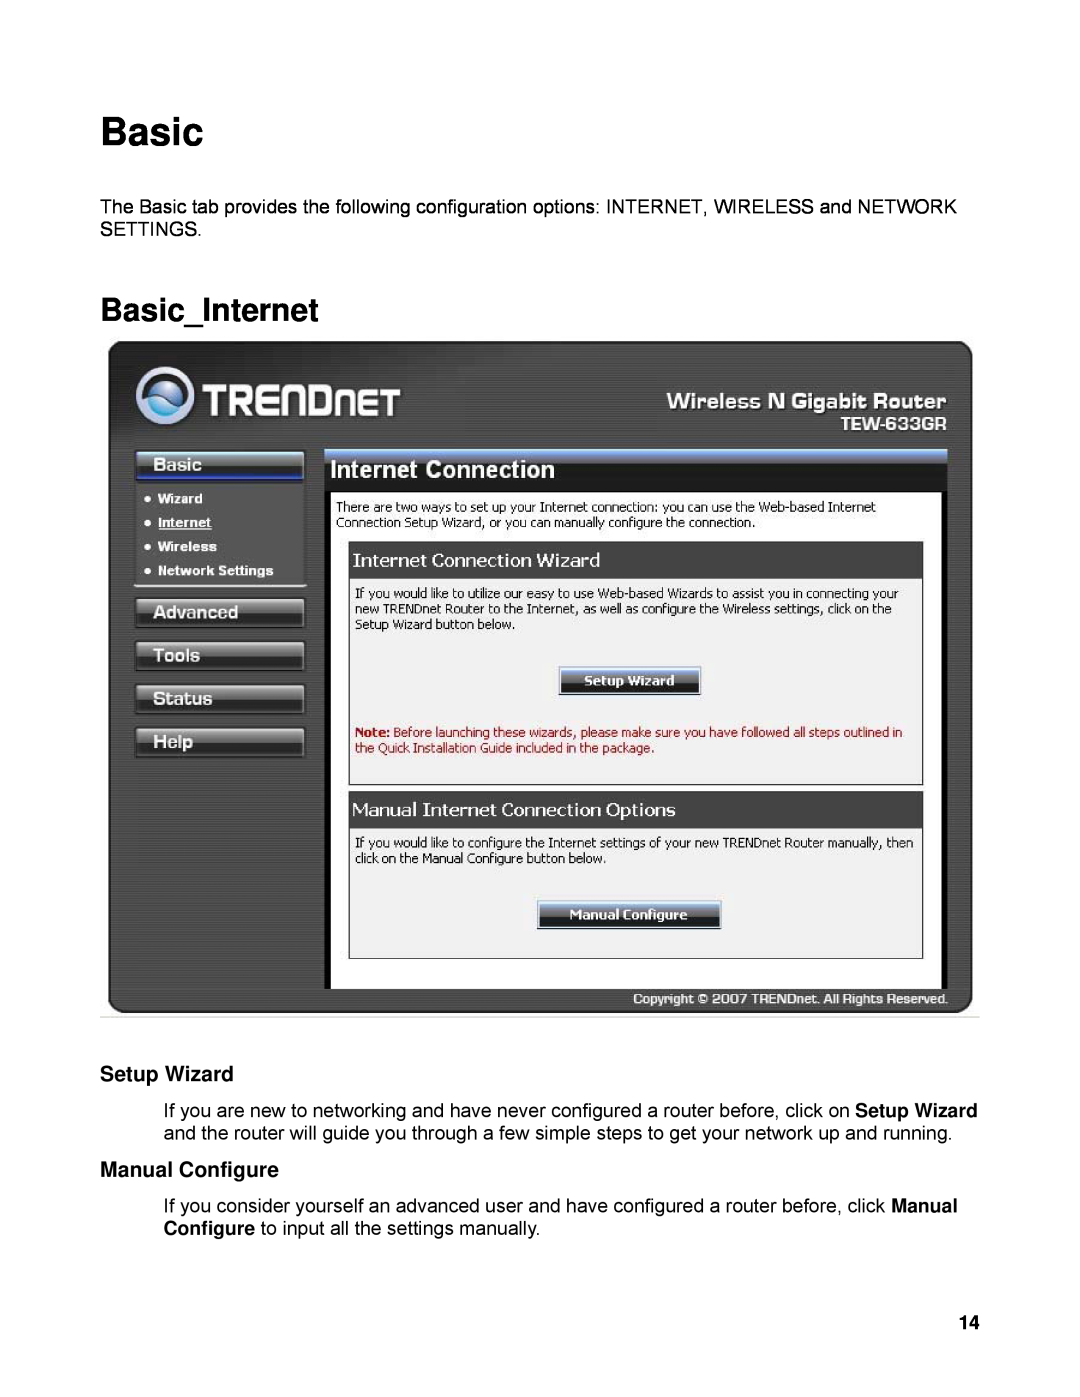 TRENDnet TEW-633GR manual BasicInternet, Setup Wizard, Manual Configure 